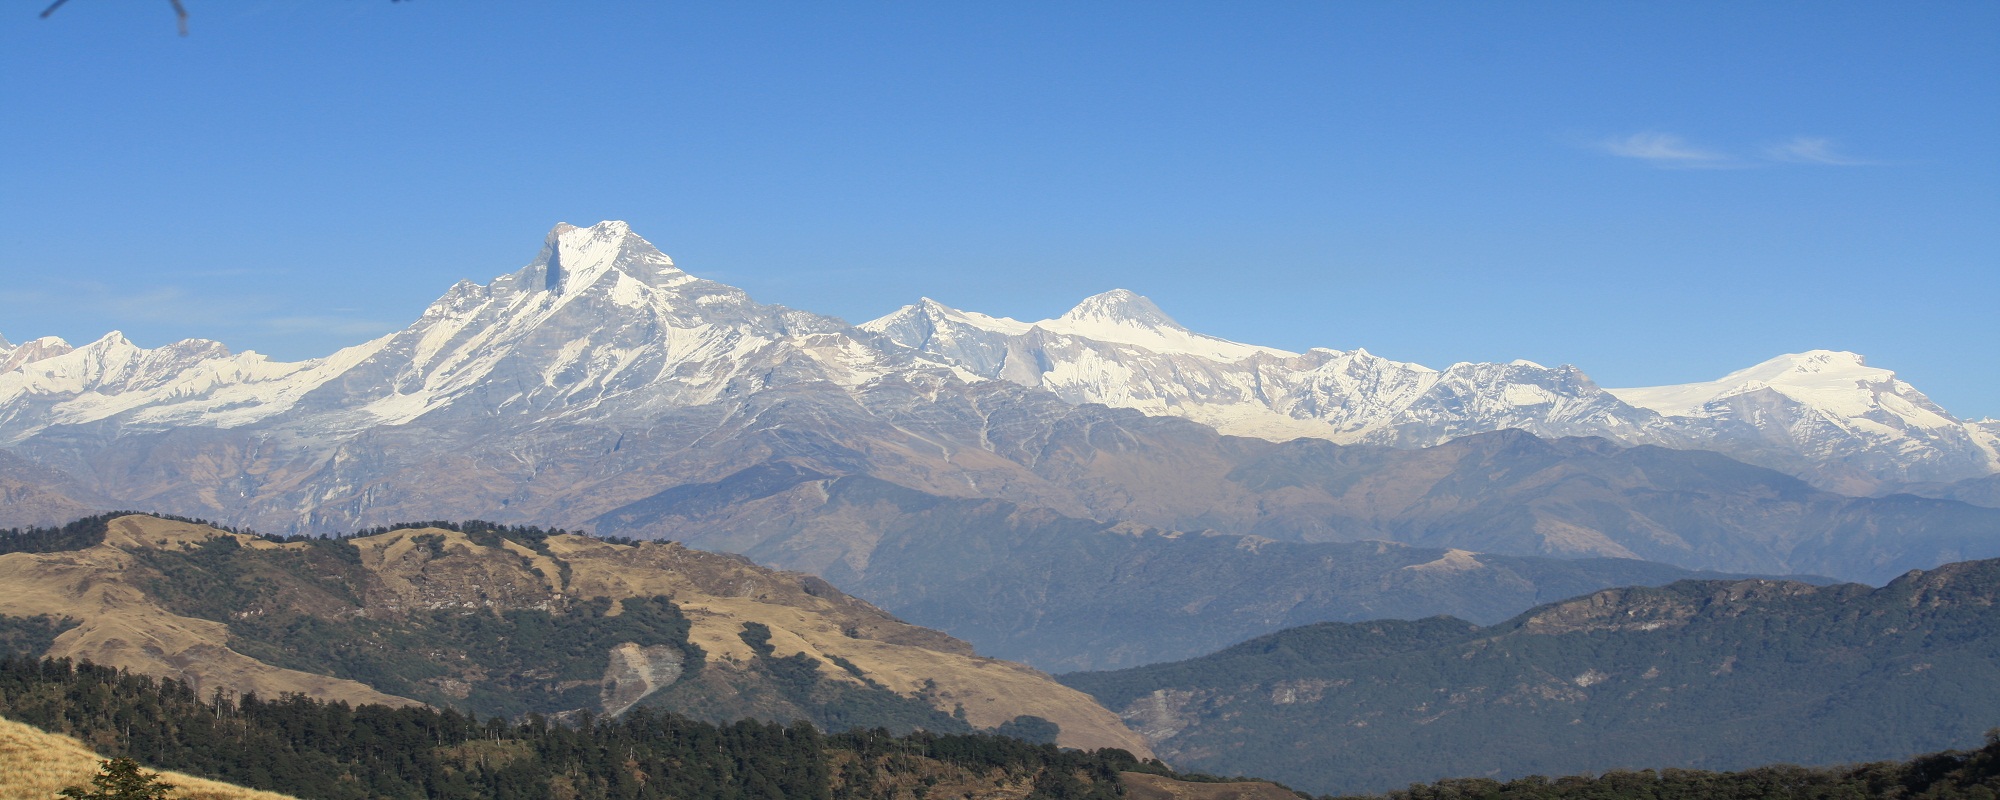 Kathmandu/Pokhara Tour